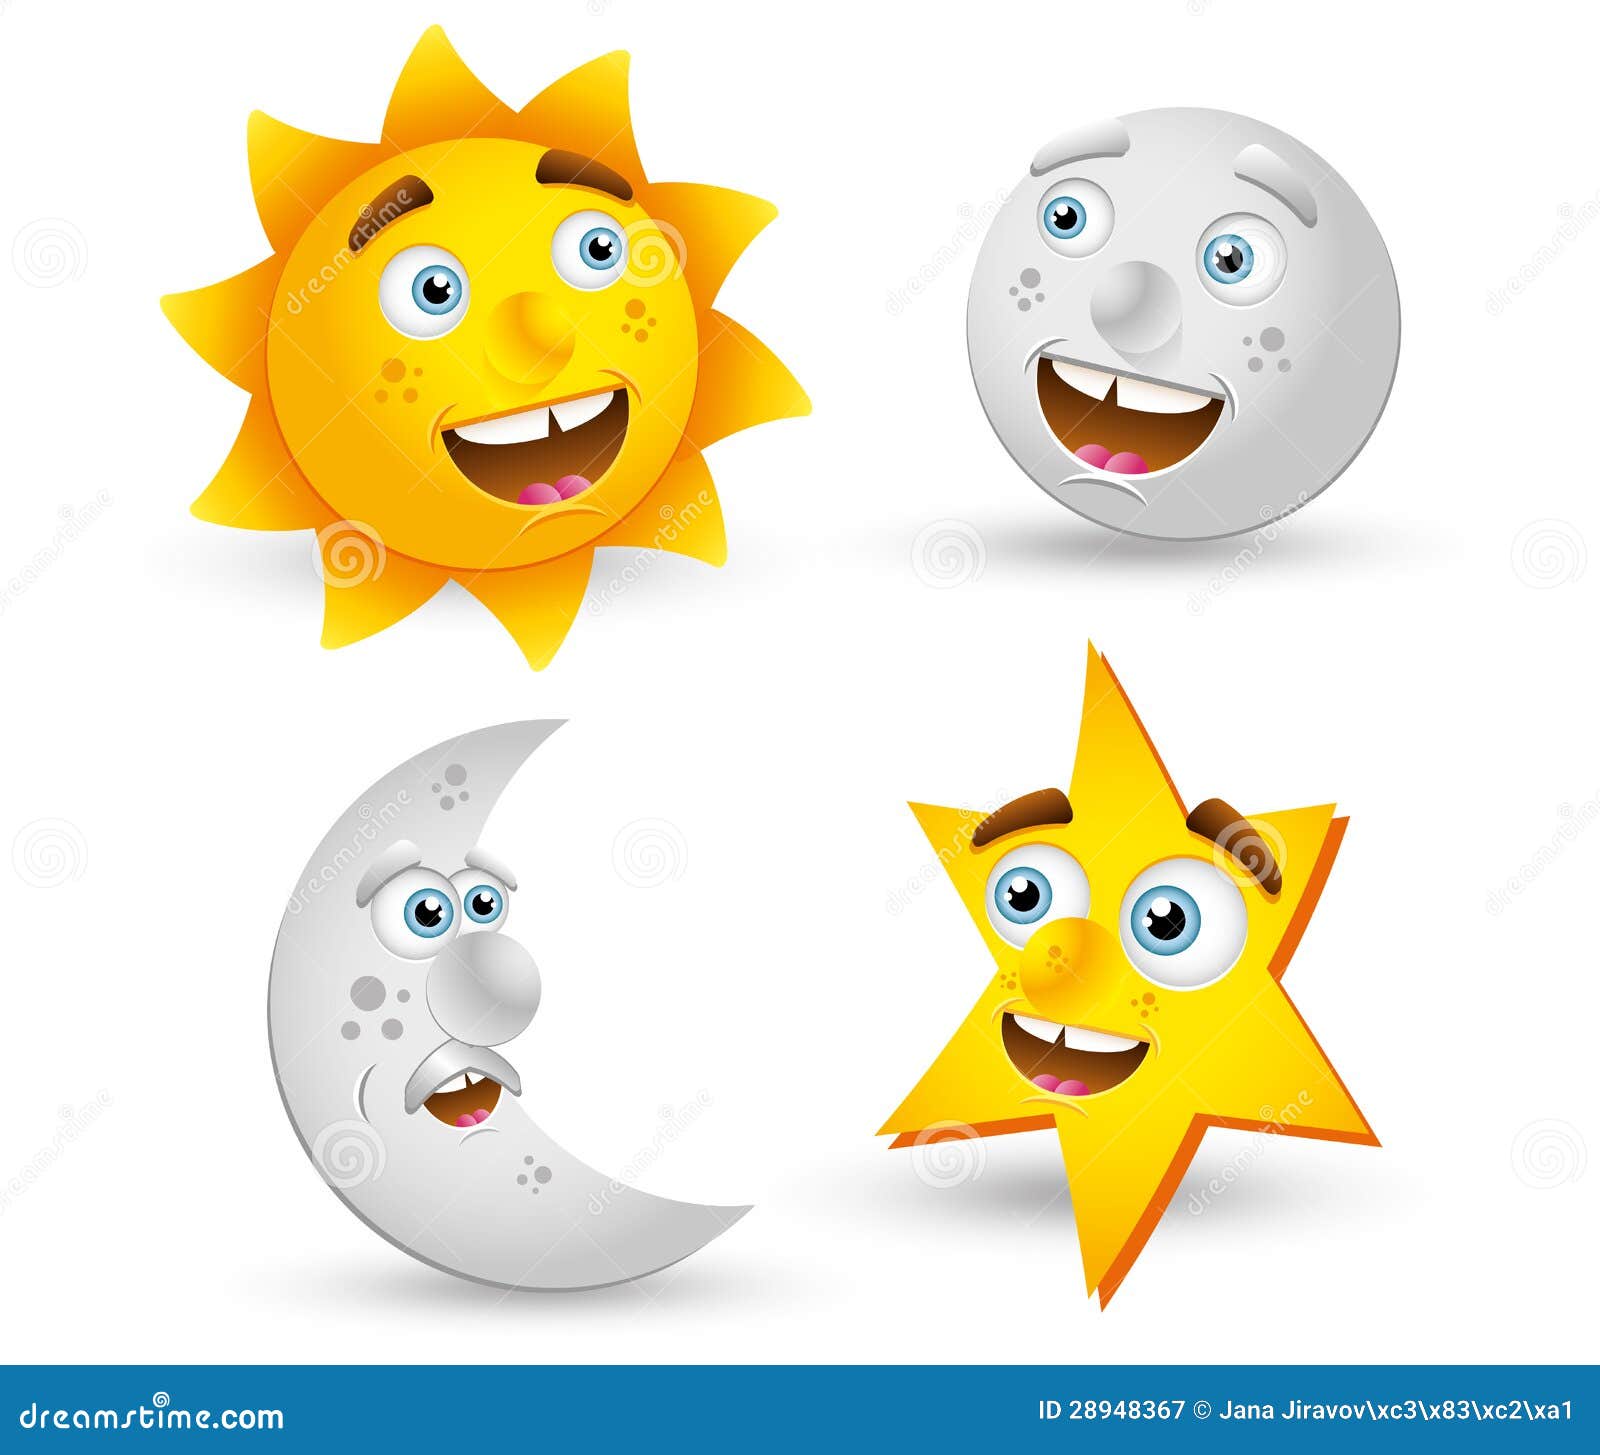 Sun Moon Star Cartoon Royalty Free Stock Photography - Image: 28948367